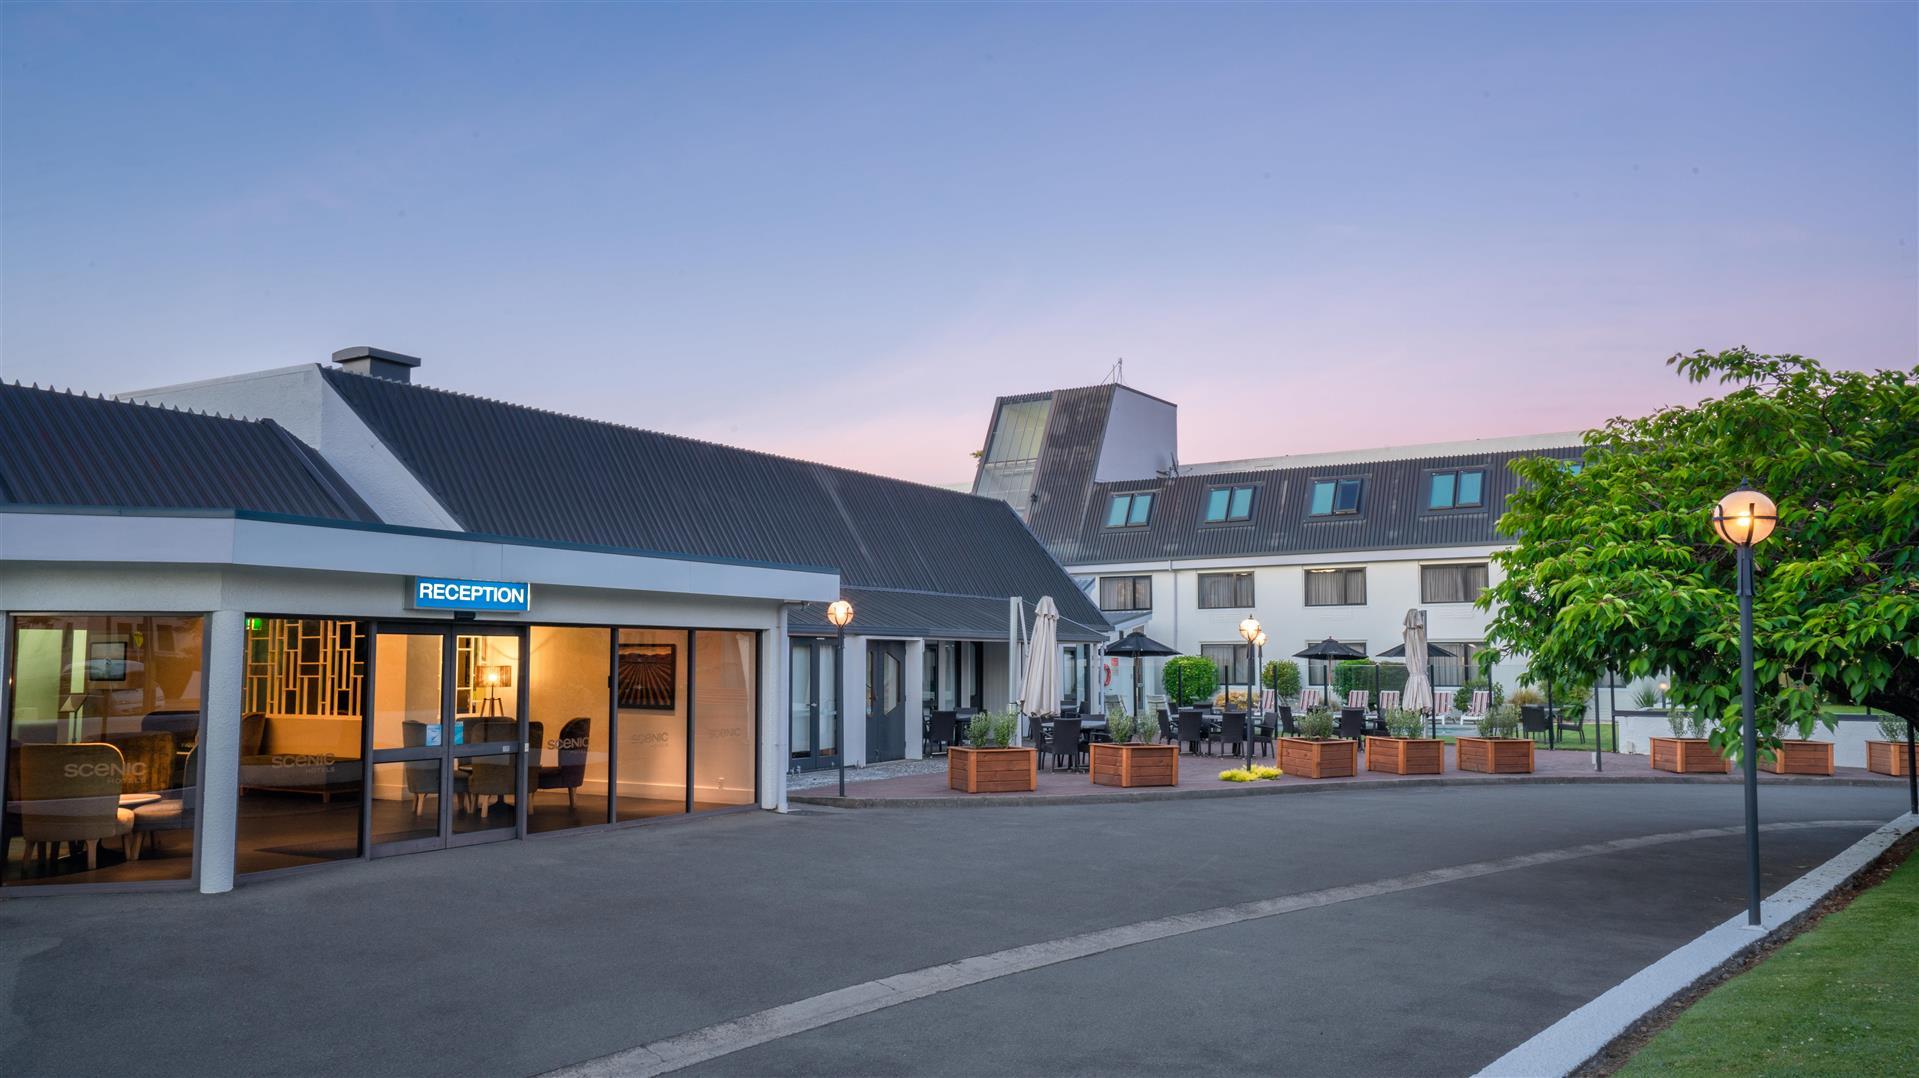 Scenic Hotel Marlborough in Blenheim, NZ